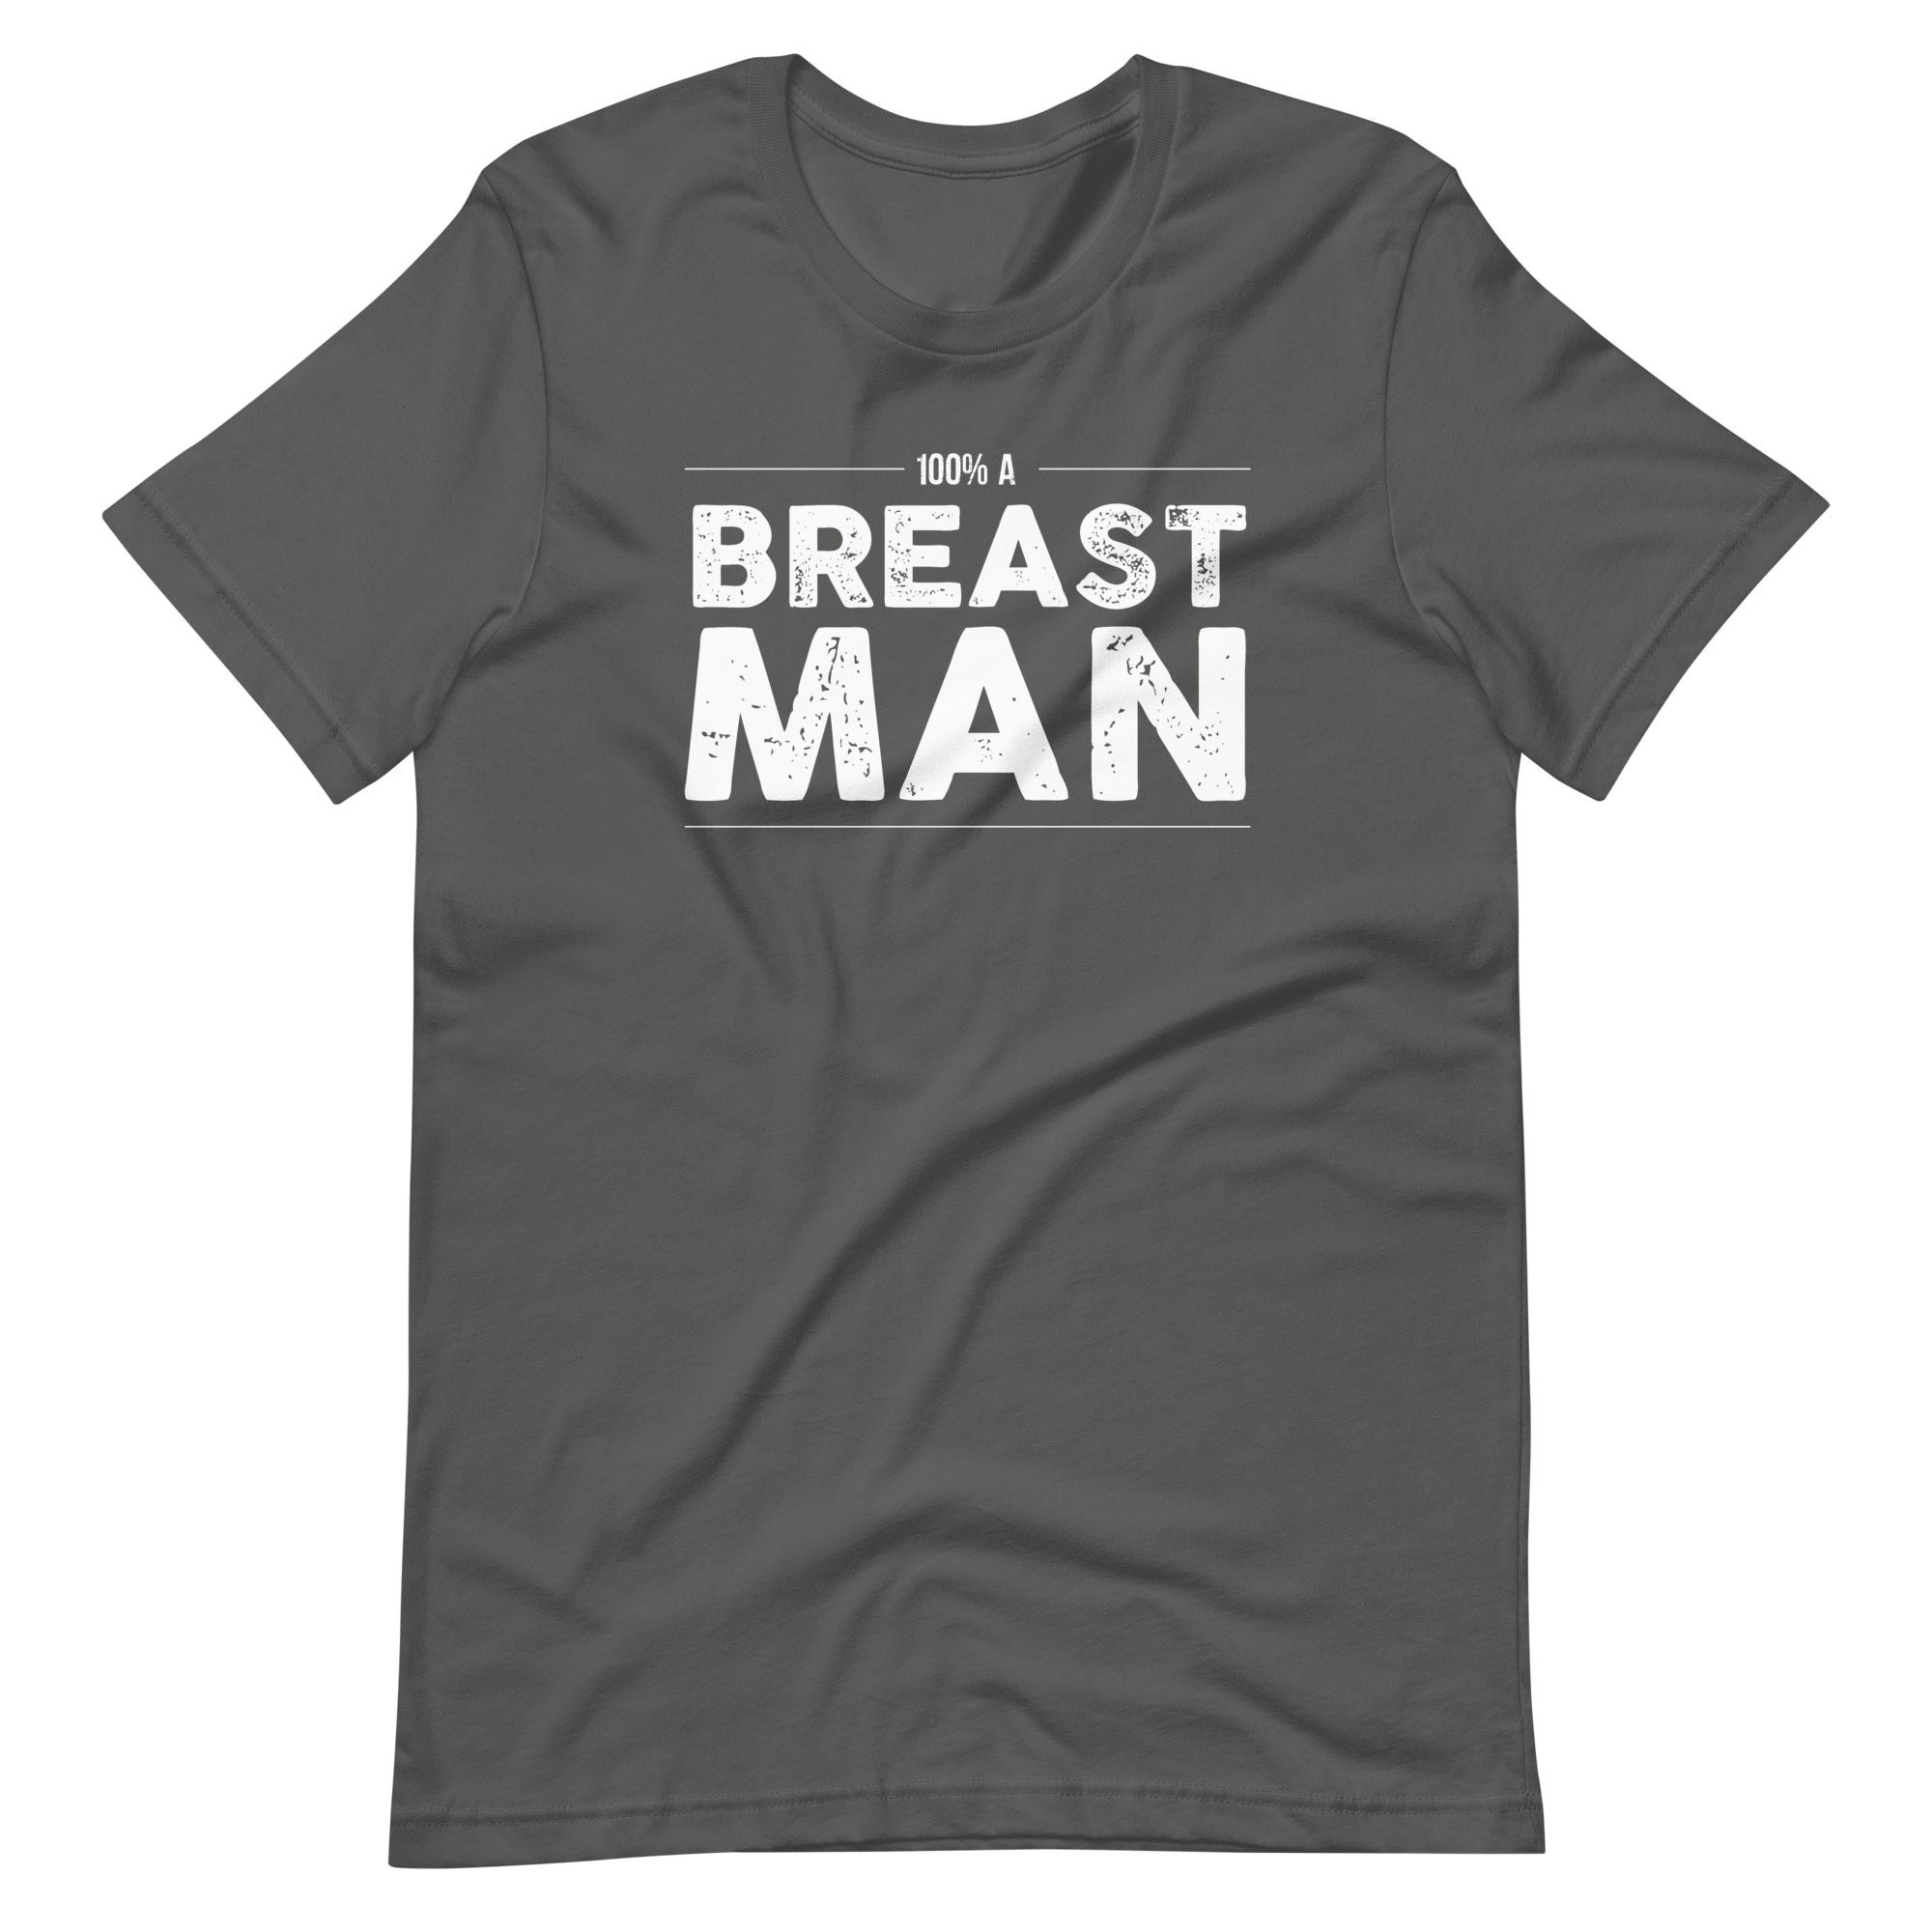 Mike Sorrentino Breast Man Shirt